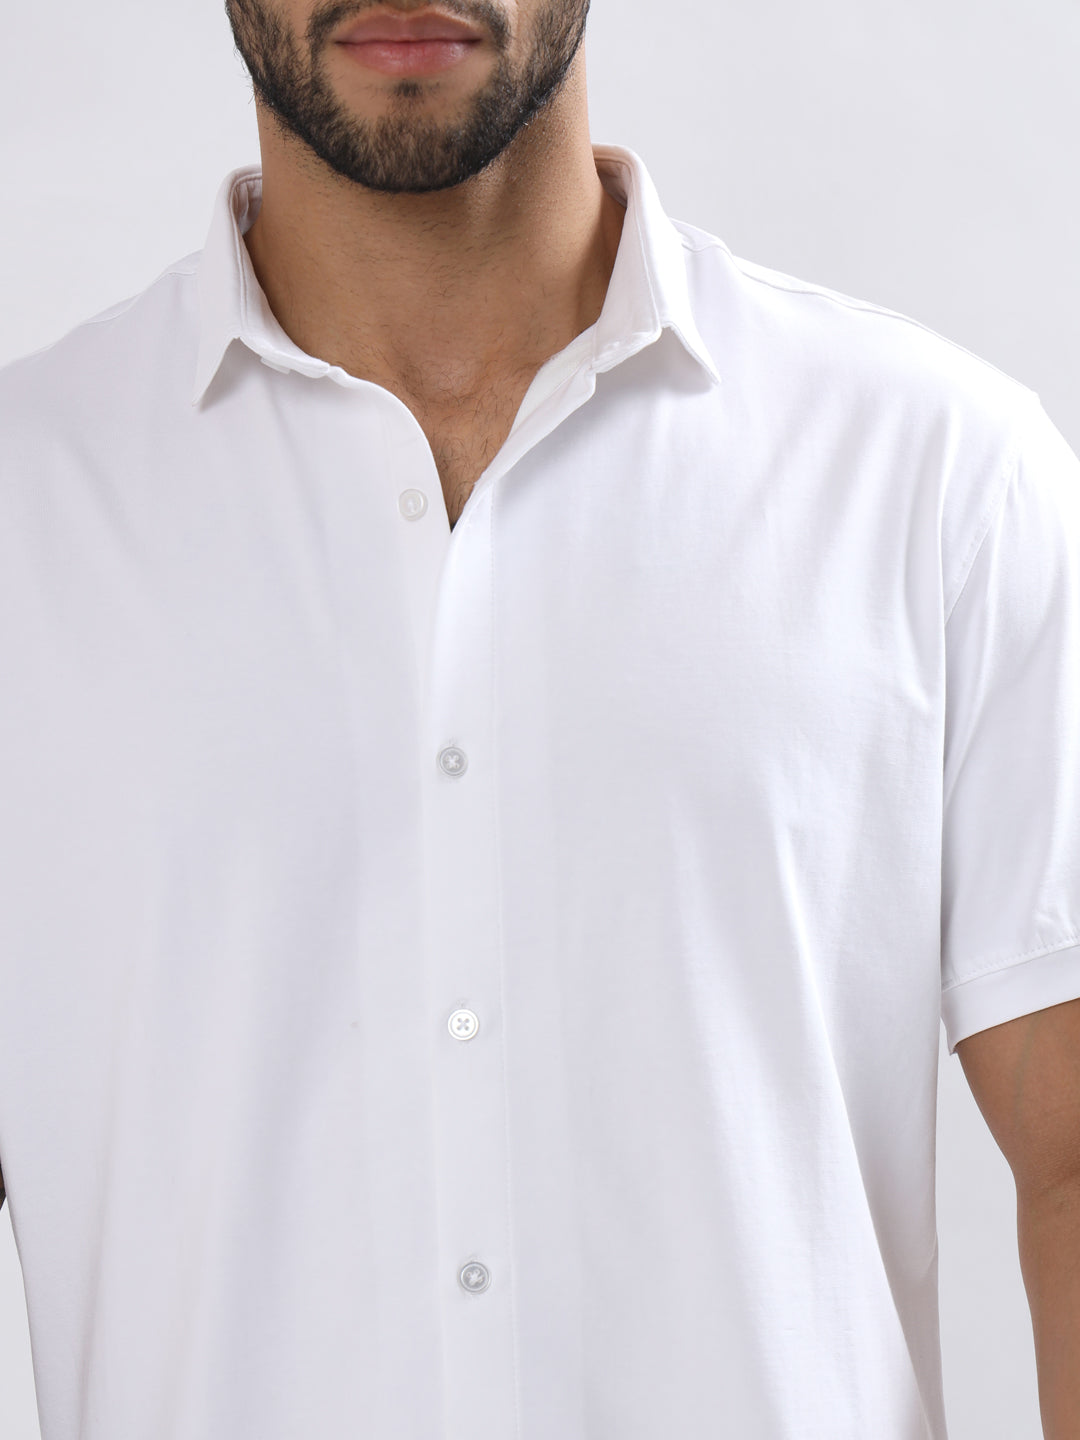 Noir White Shirt - Wearduds